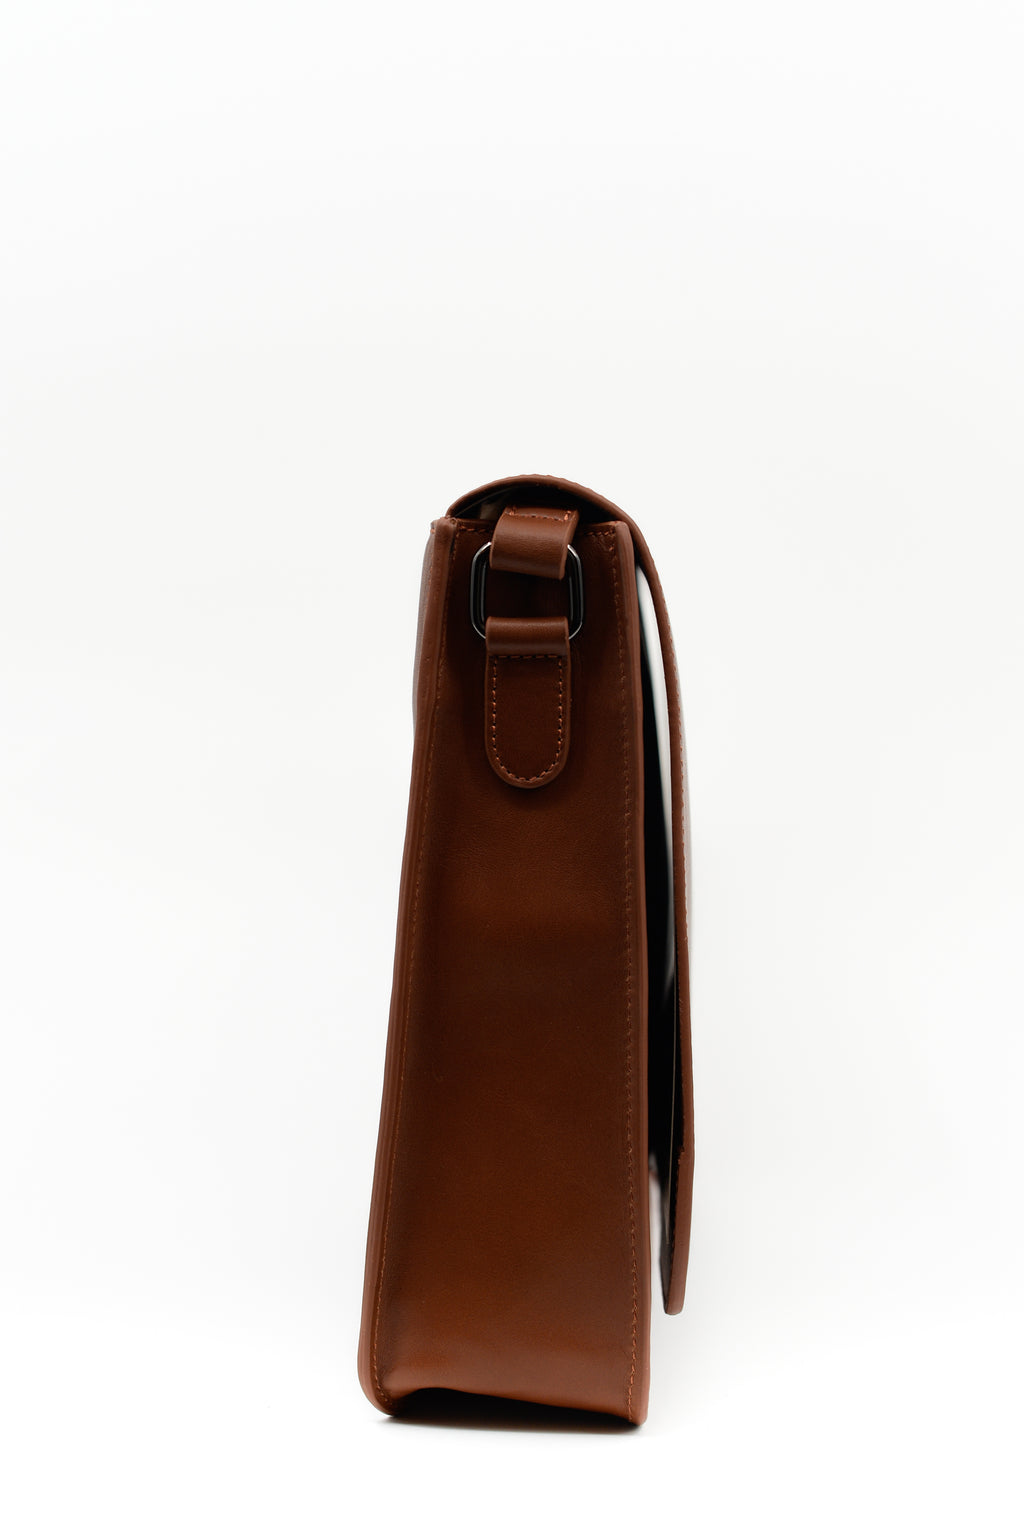 Medium crossbody handbag in cognac nappa leather